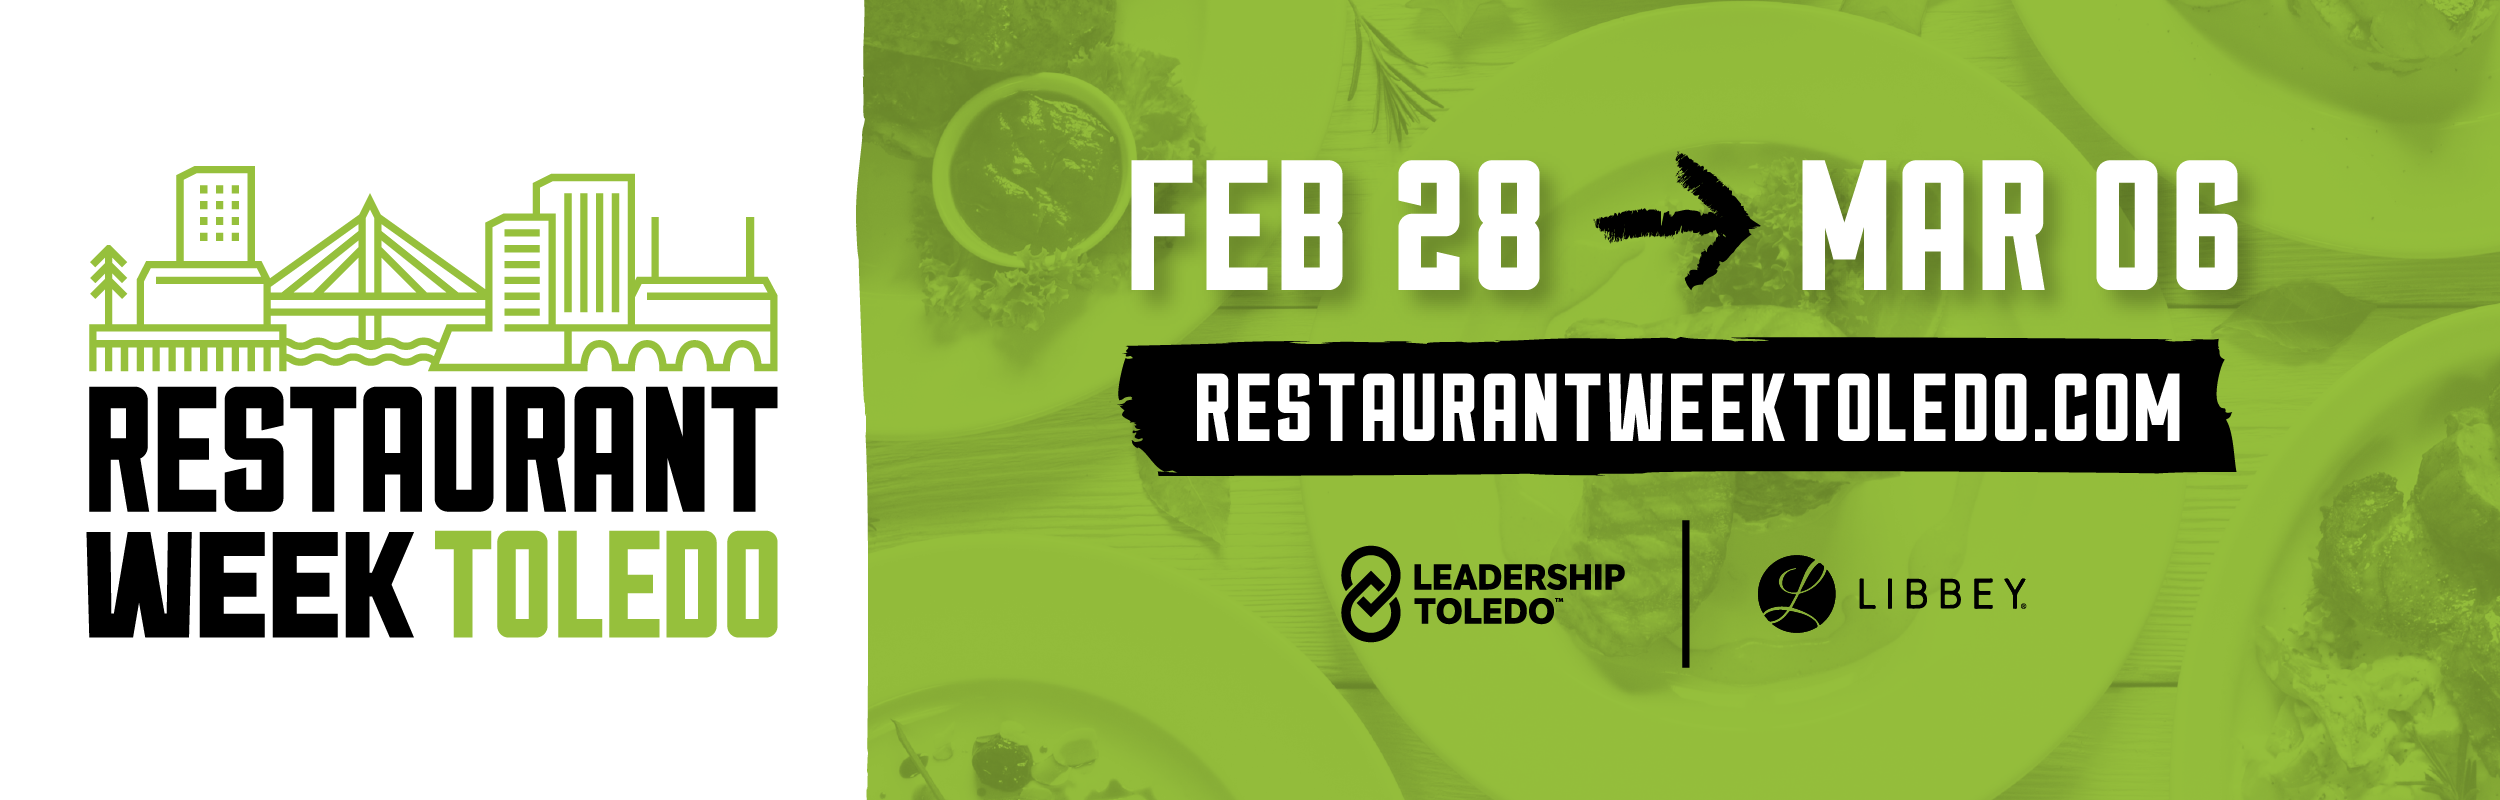 Restaurant Week Toledo, February 28 - March 6, restaurantweektoledo.com